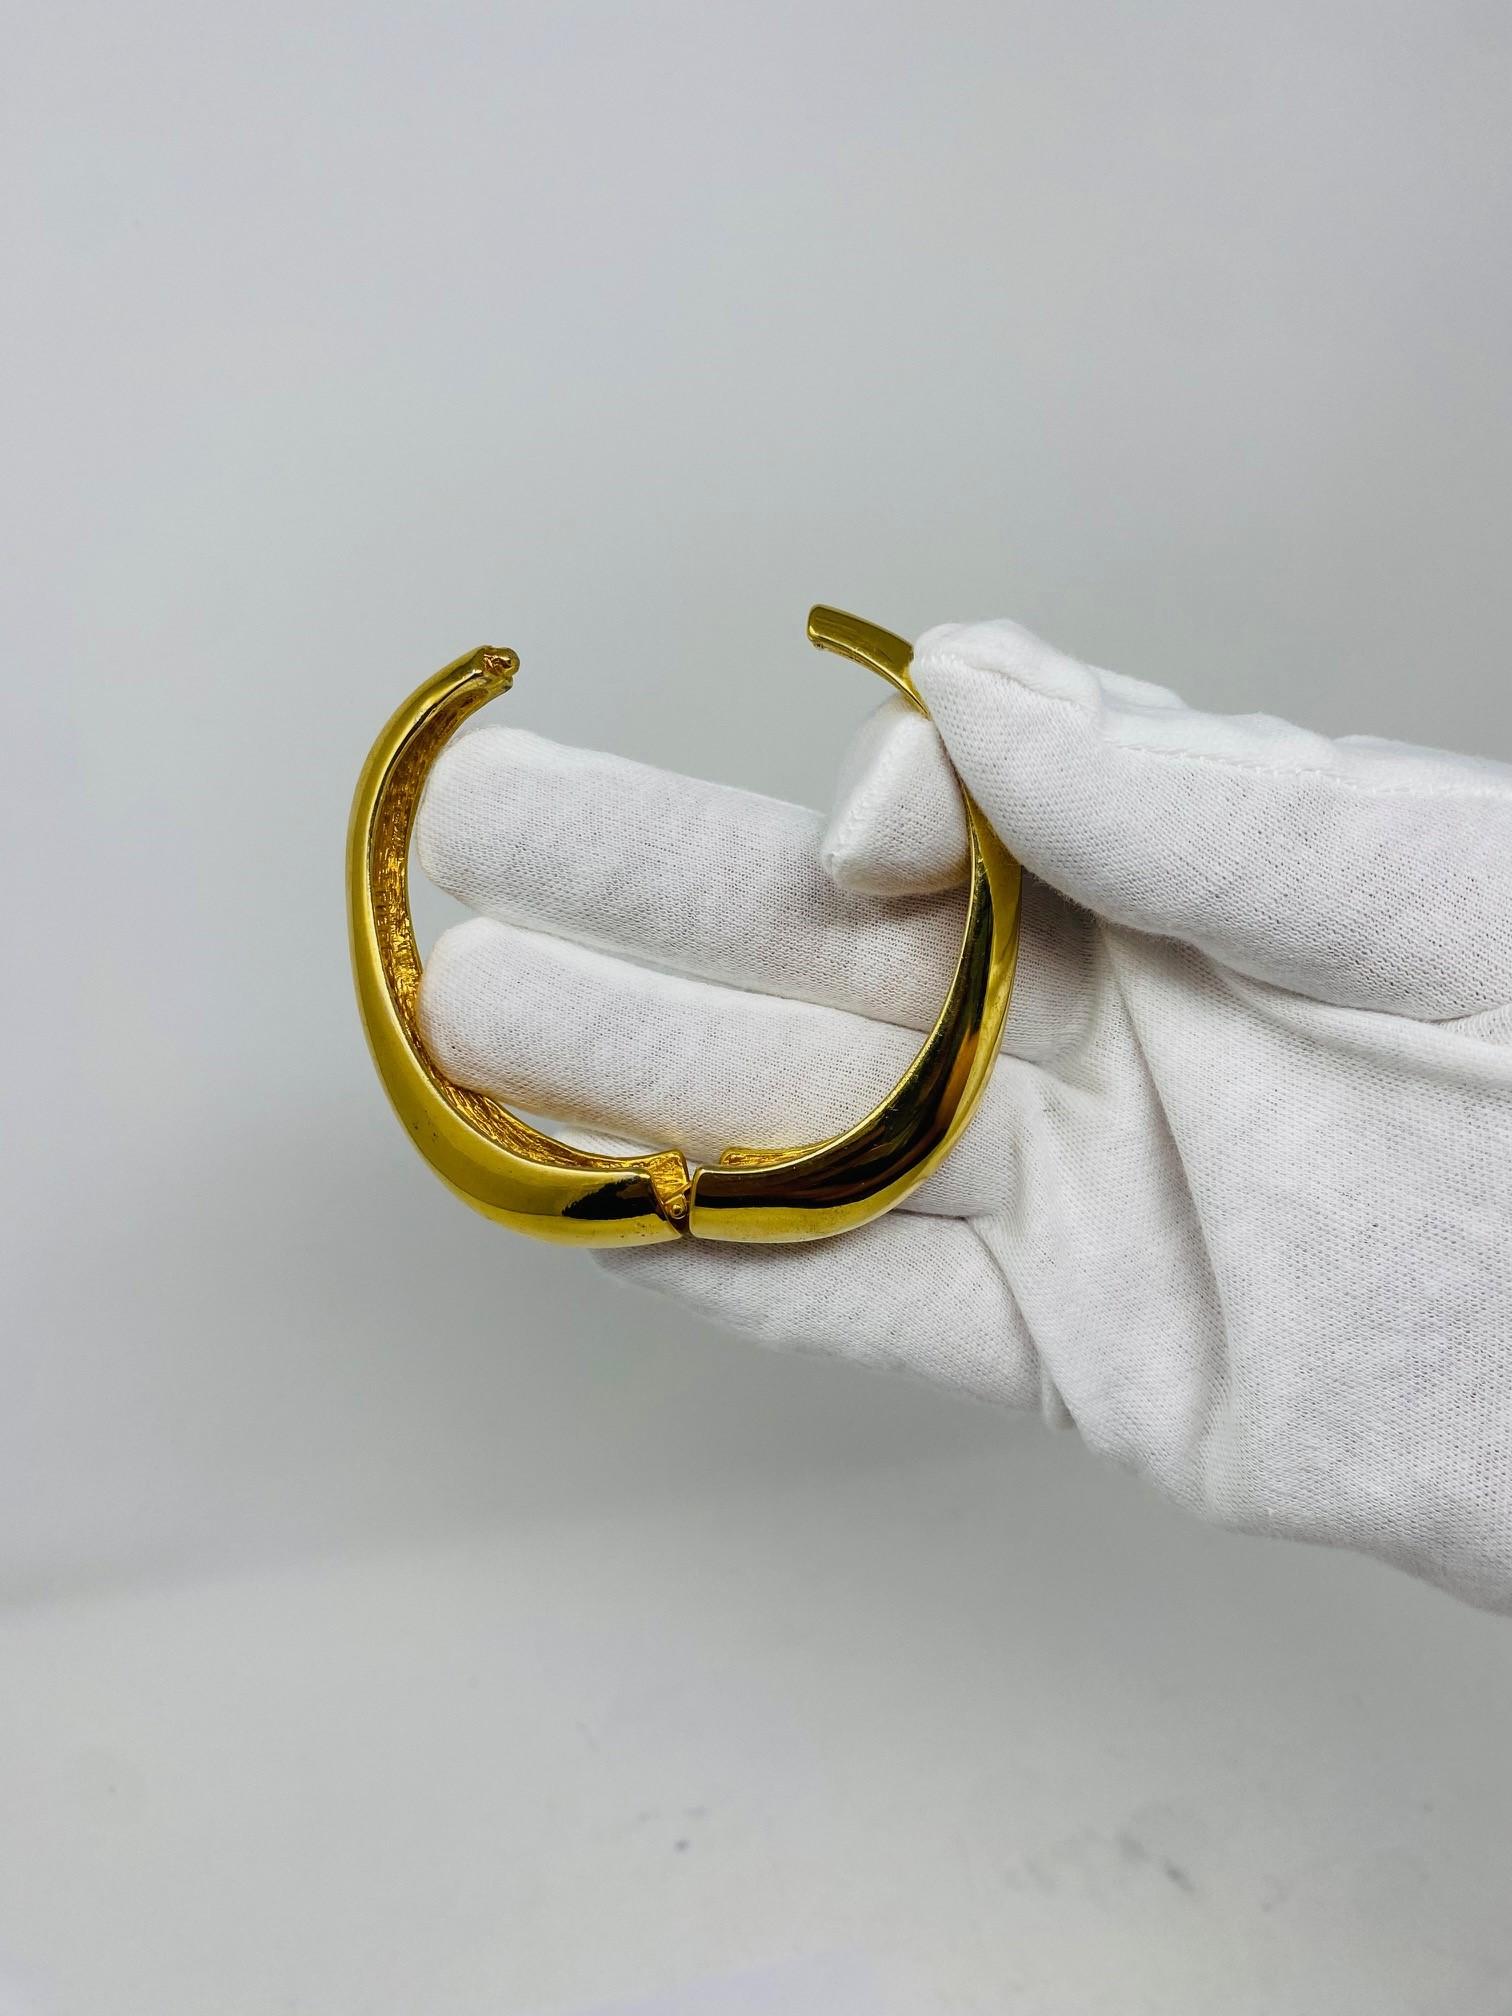 Vintage Pierre Cardin Goldmessing Modernist Armband Manschette, 1960er Jahre (Chrom) im Angebot